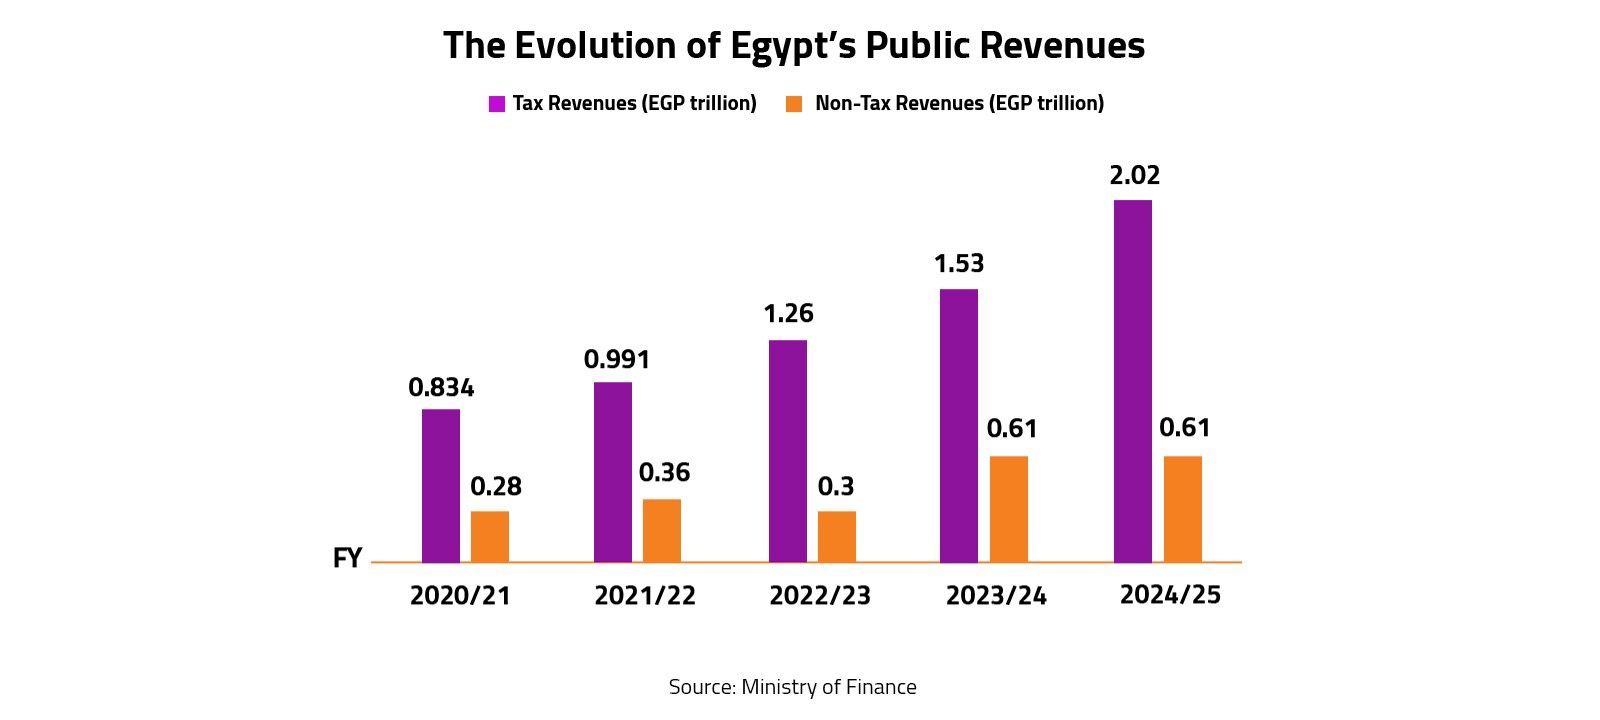 The Evolution of Egypt’s Public Revenues